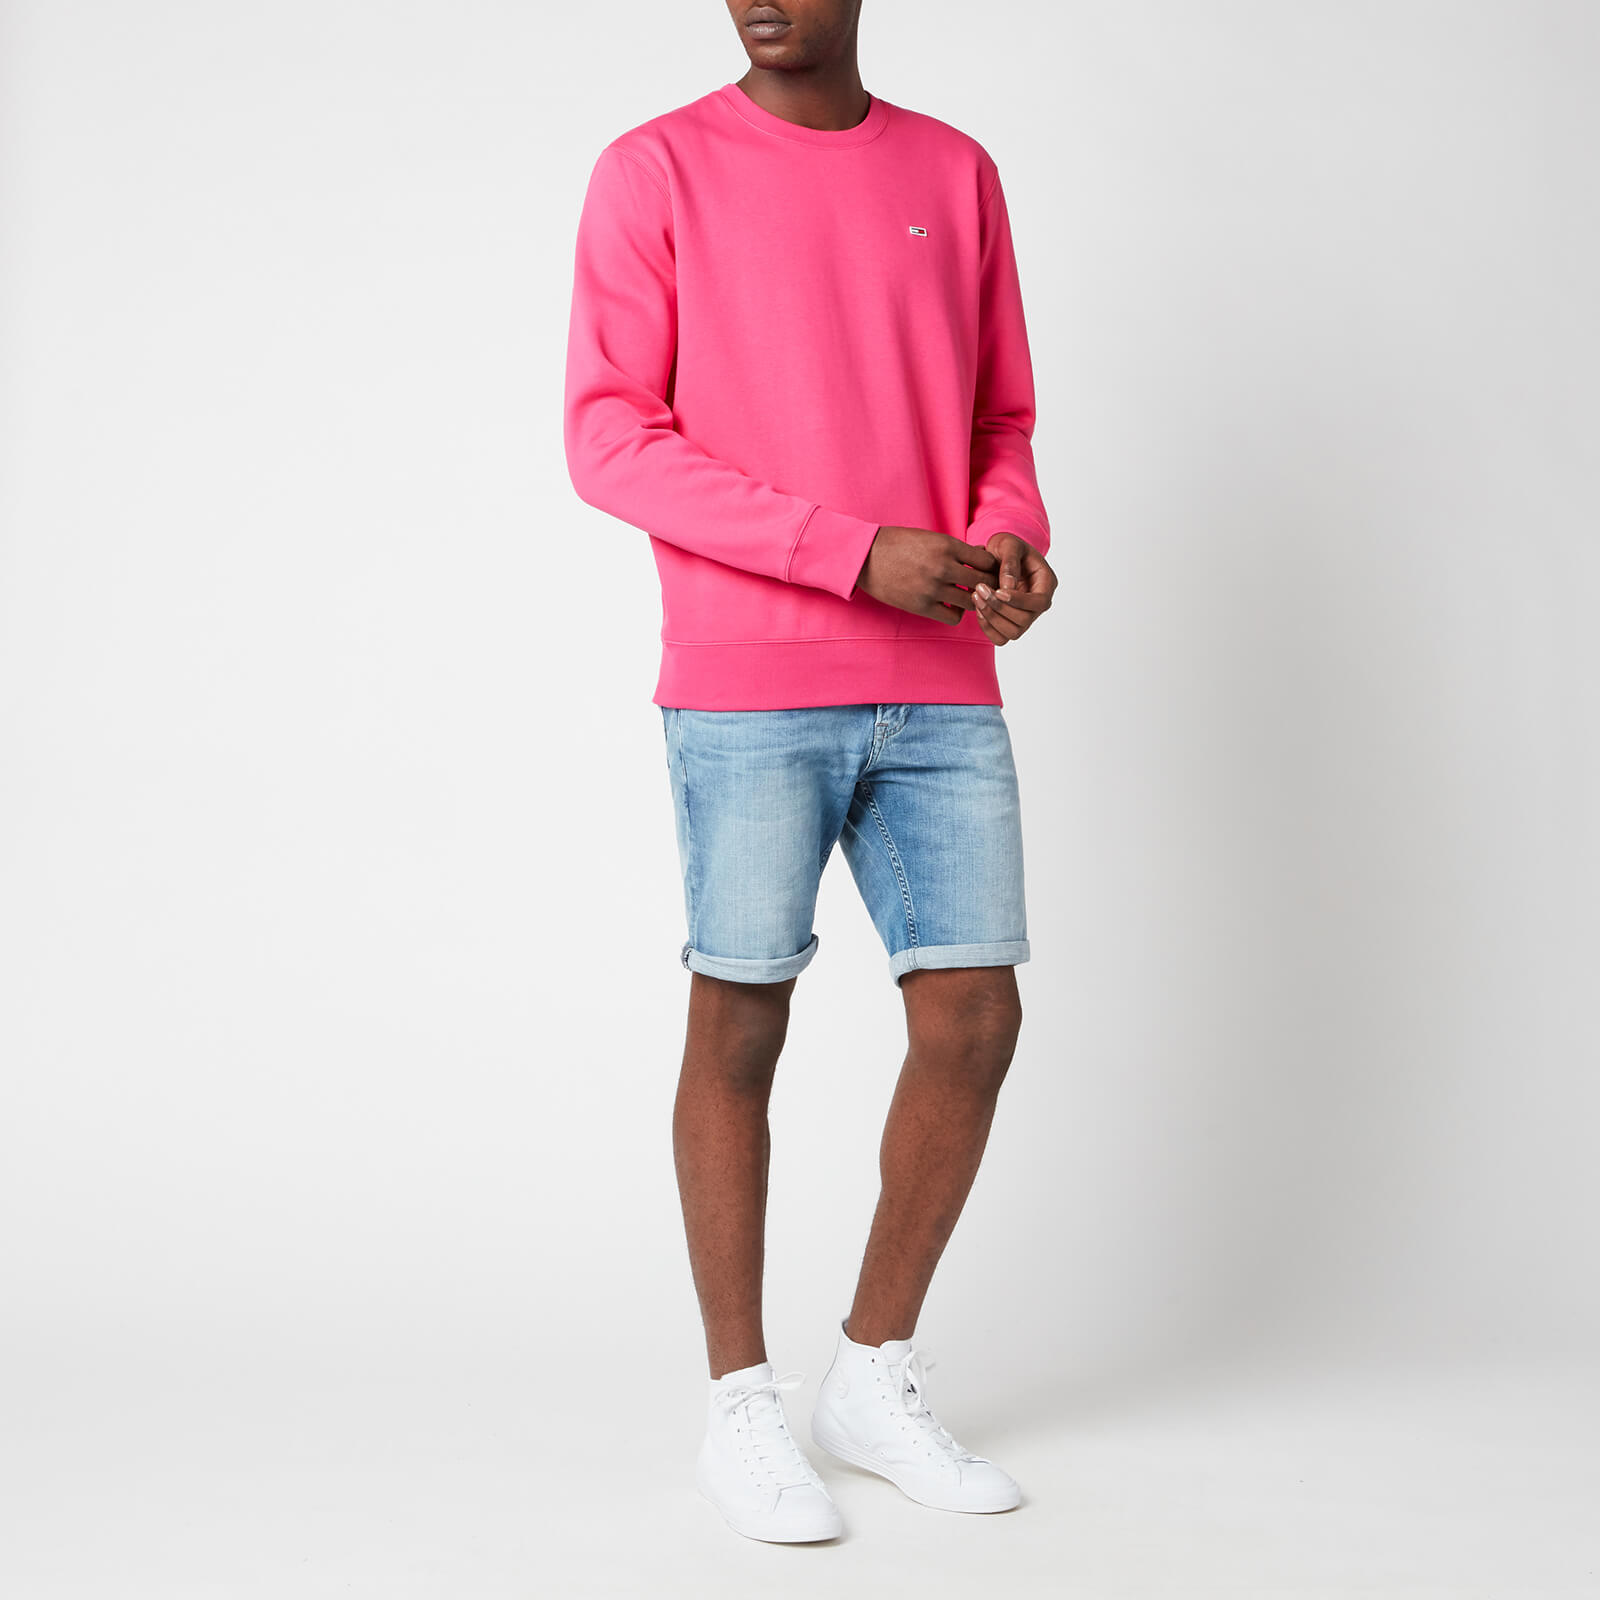 Tommy Jeans Men's Regular Fit Fleece Crewneck Sweatshirt - Bright Cerise Pink - M